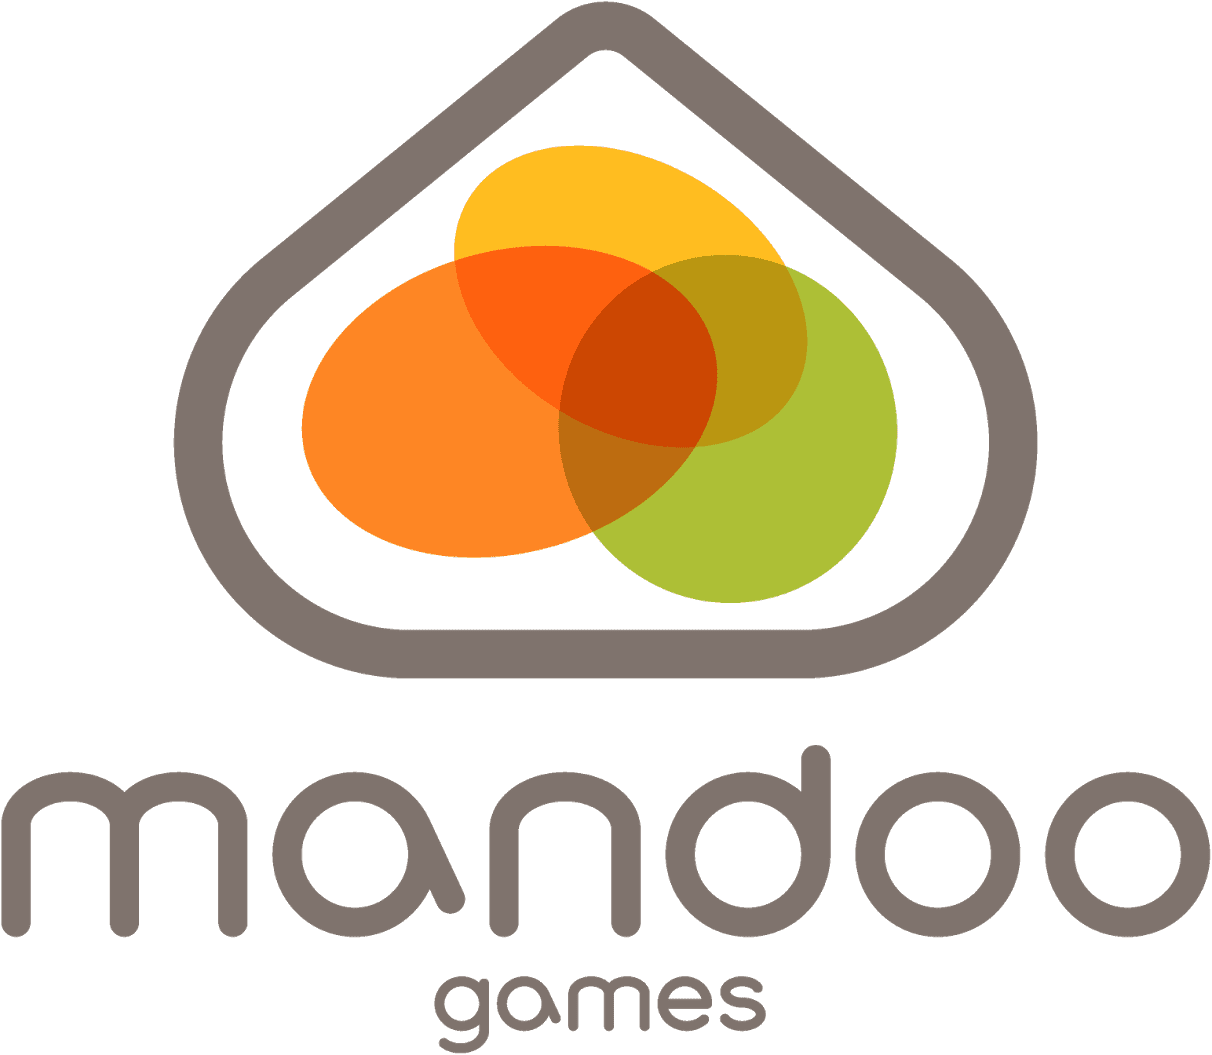 Brand: Mandoo Games